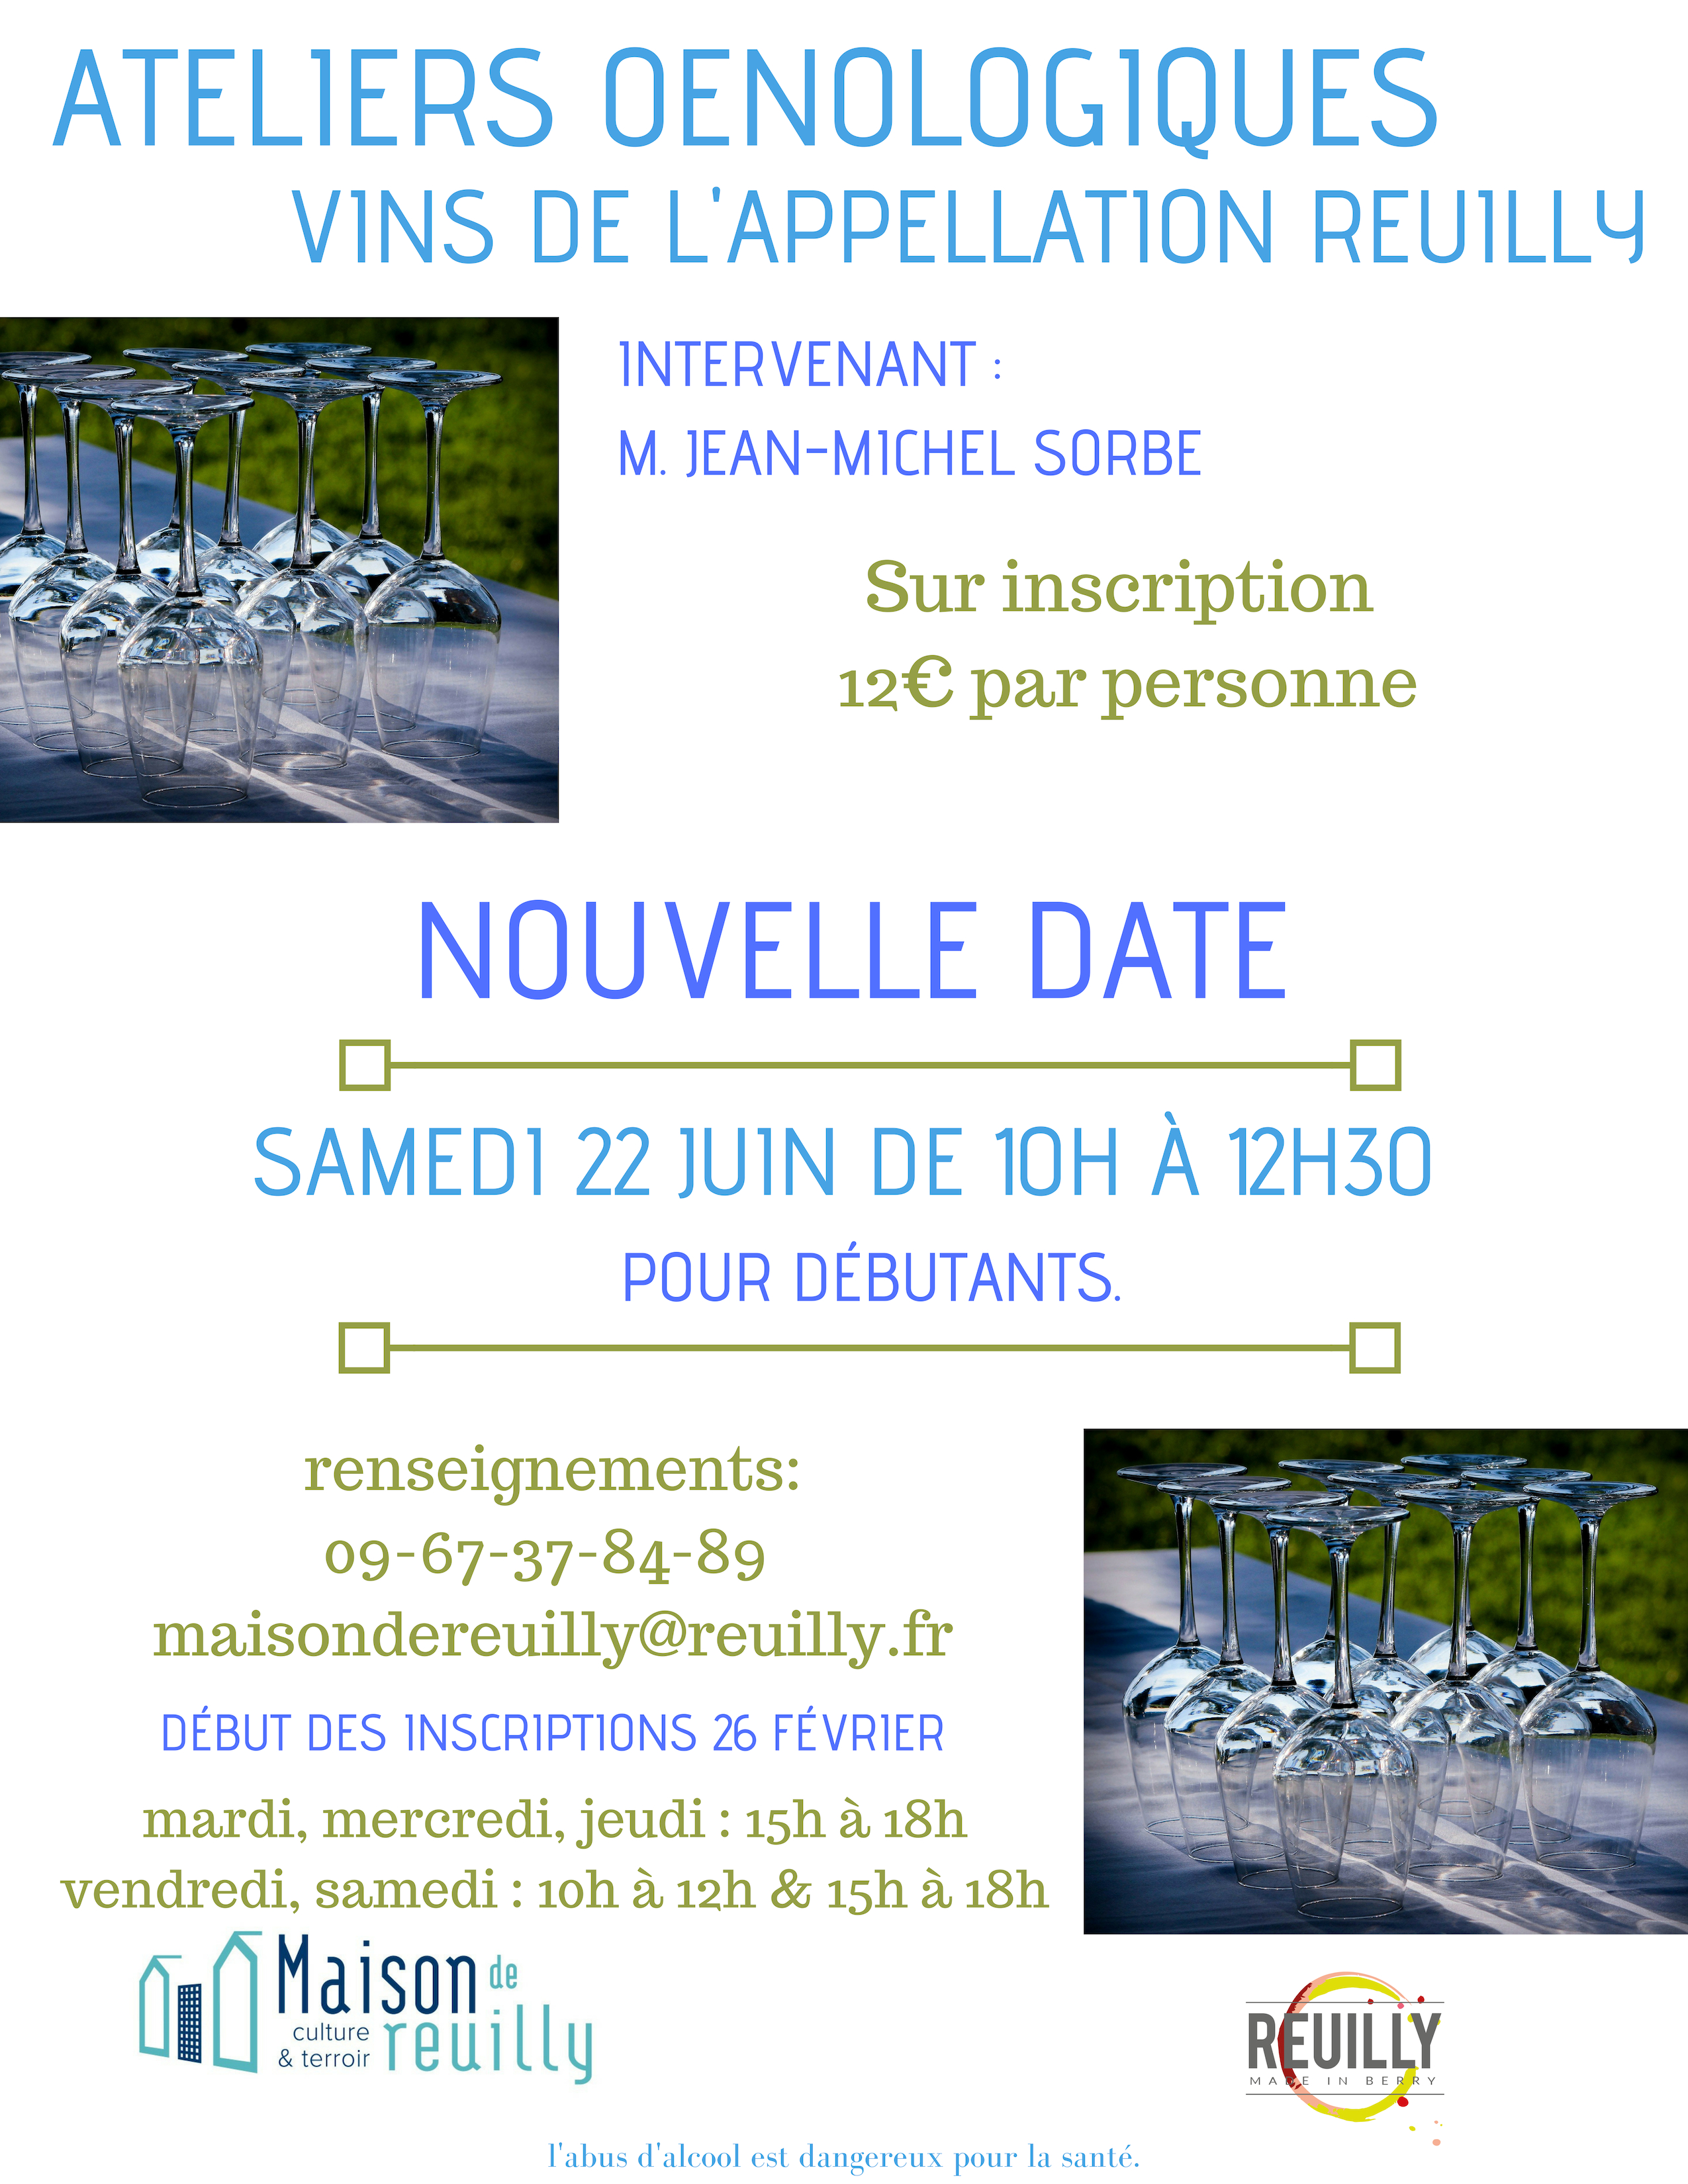 atelier oenologique reuilly sorbe 22 juin 2019